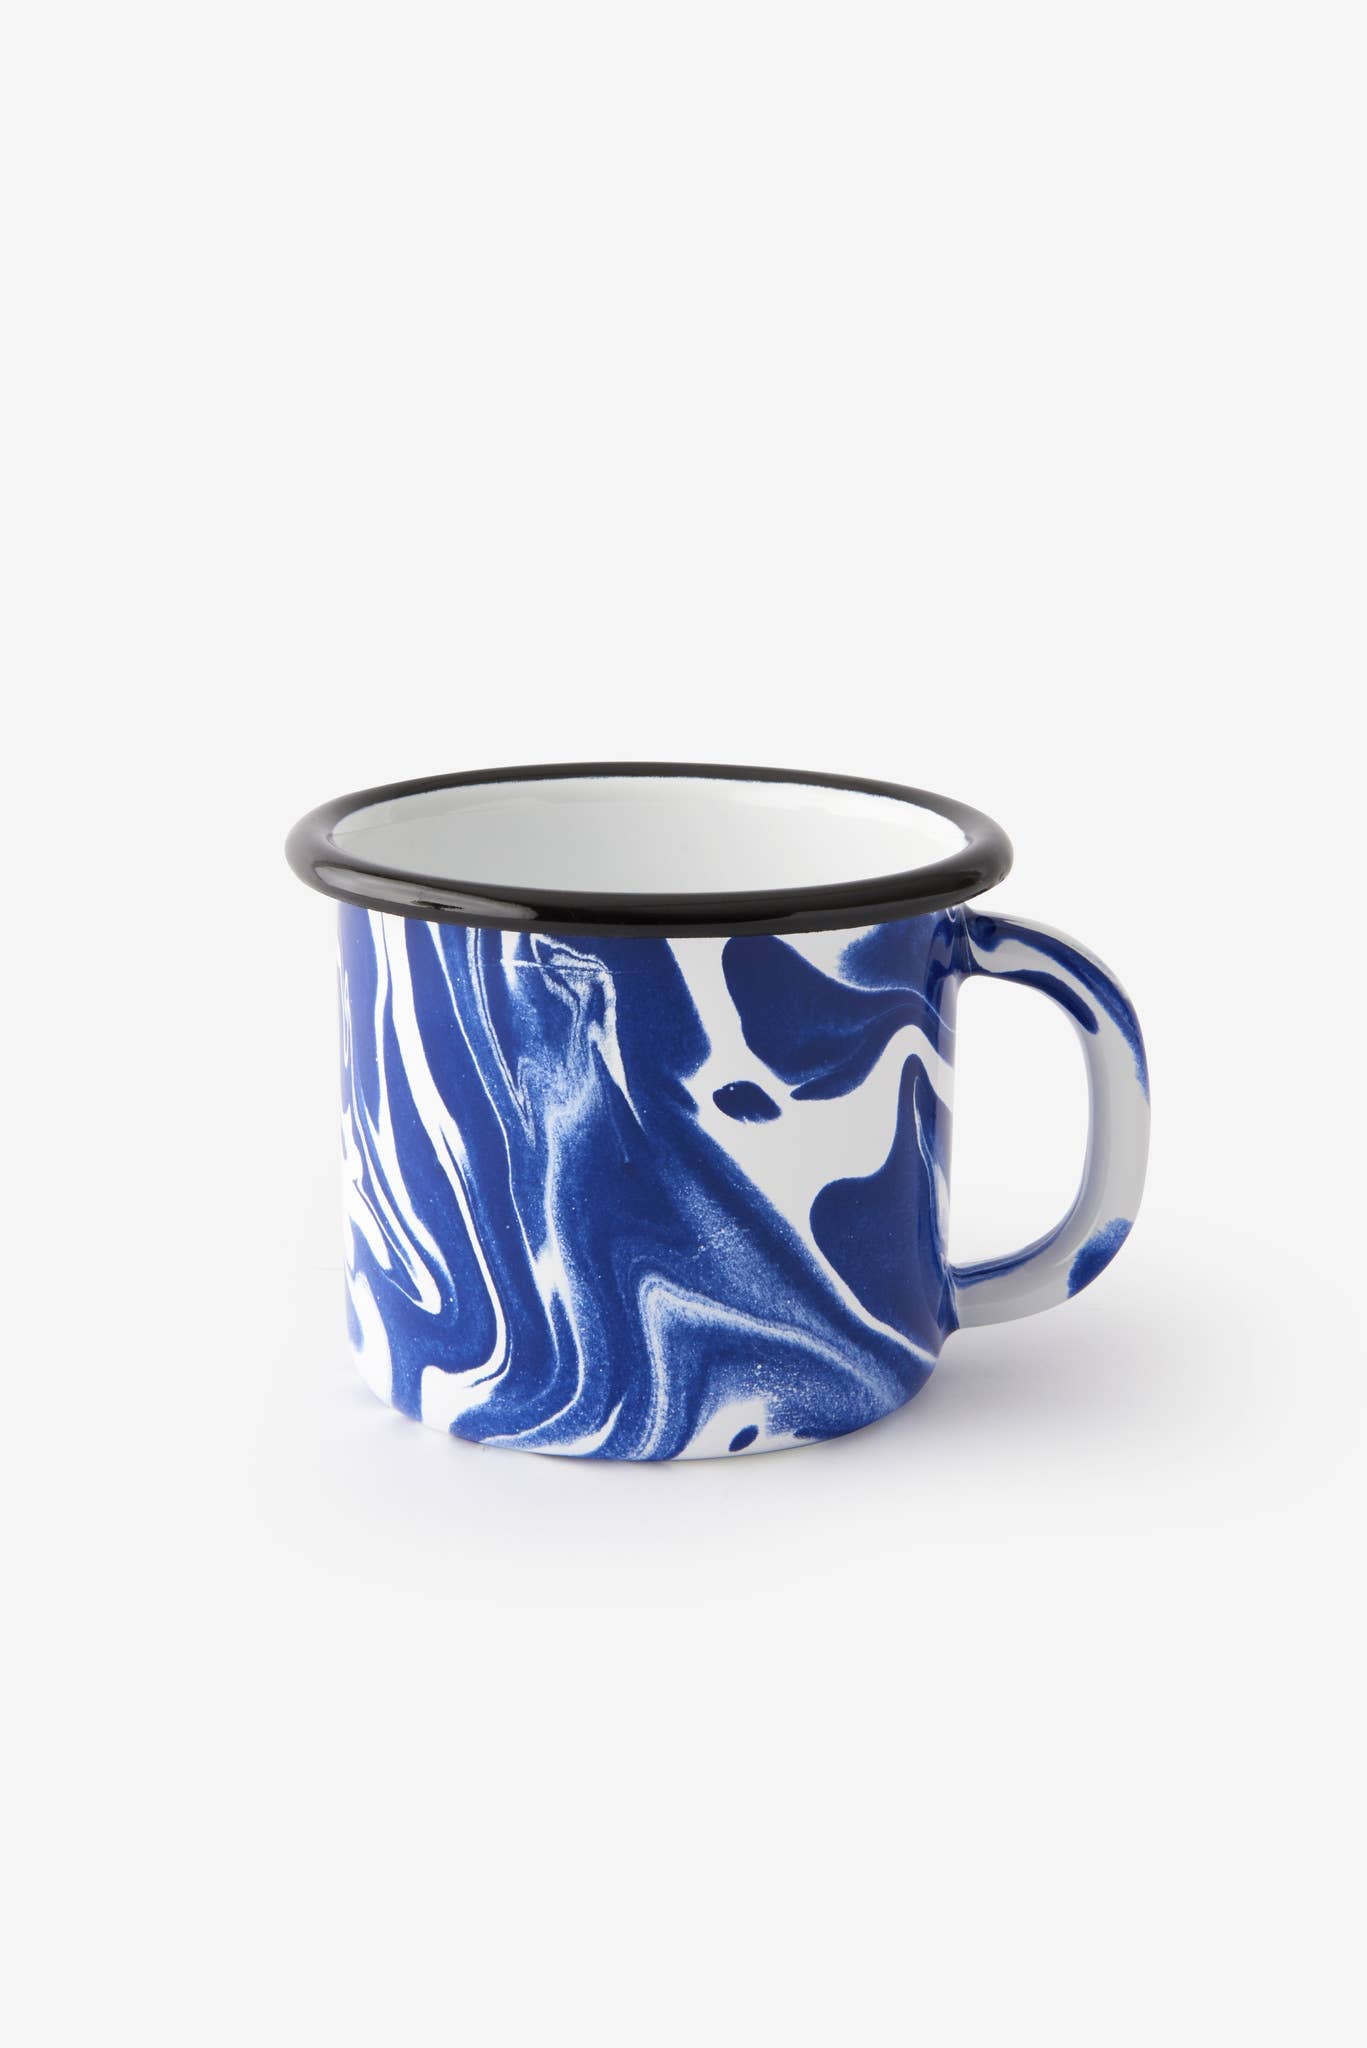 In Stock November 20th: BORNN Swirl Enamelware Mug: Black or Blue Swirl (12 oz)